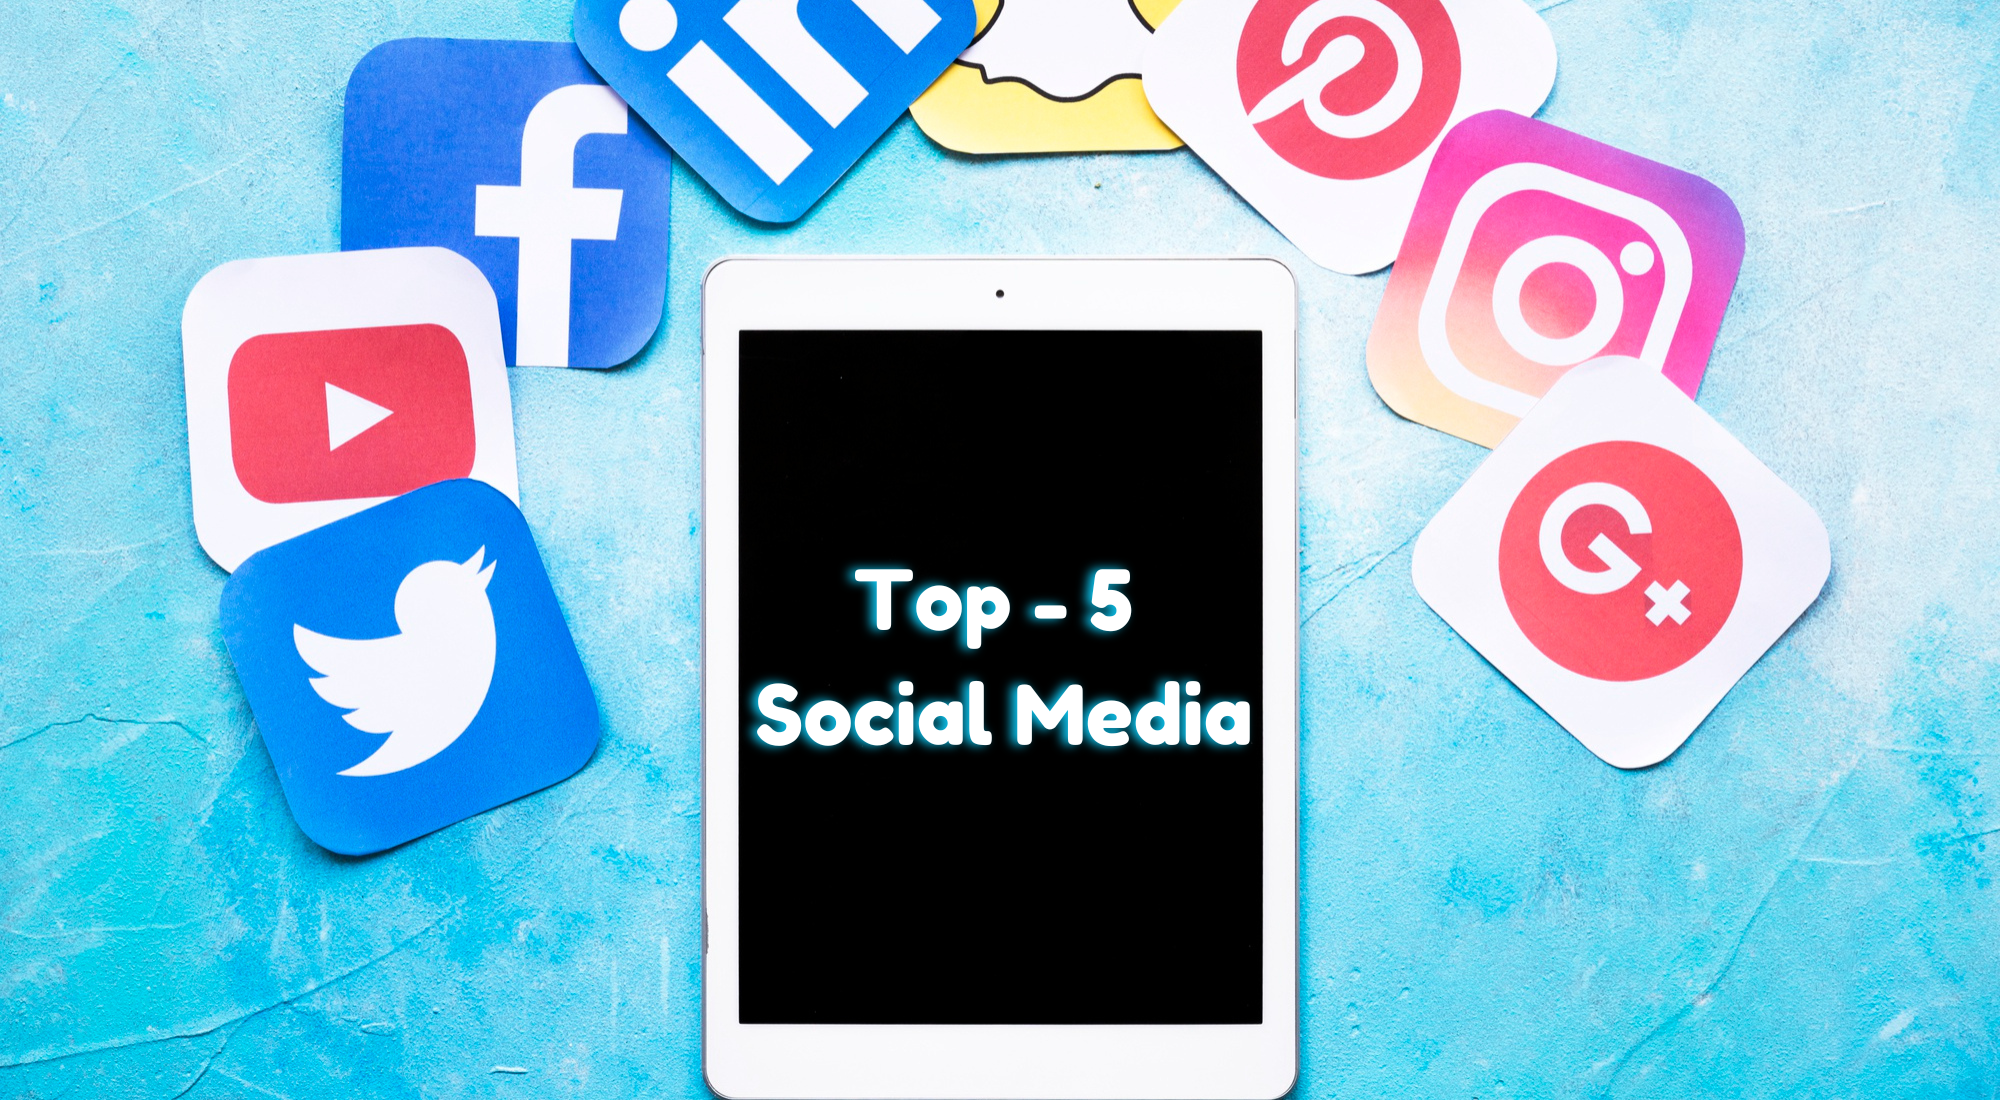 Top 5 Social Media